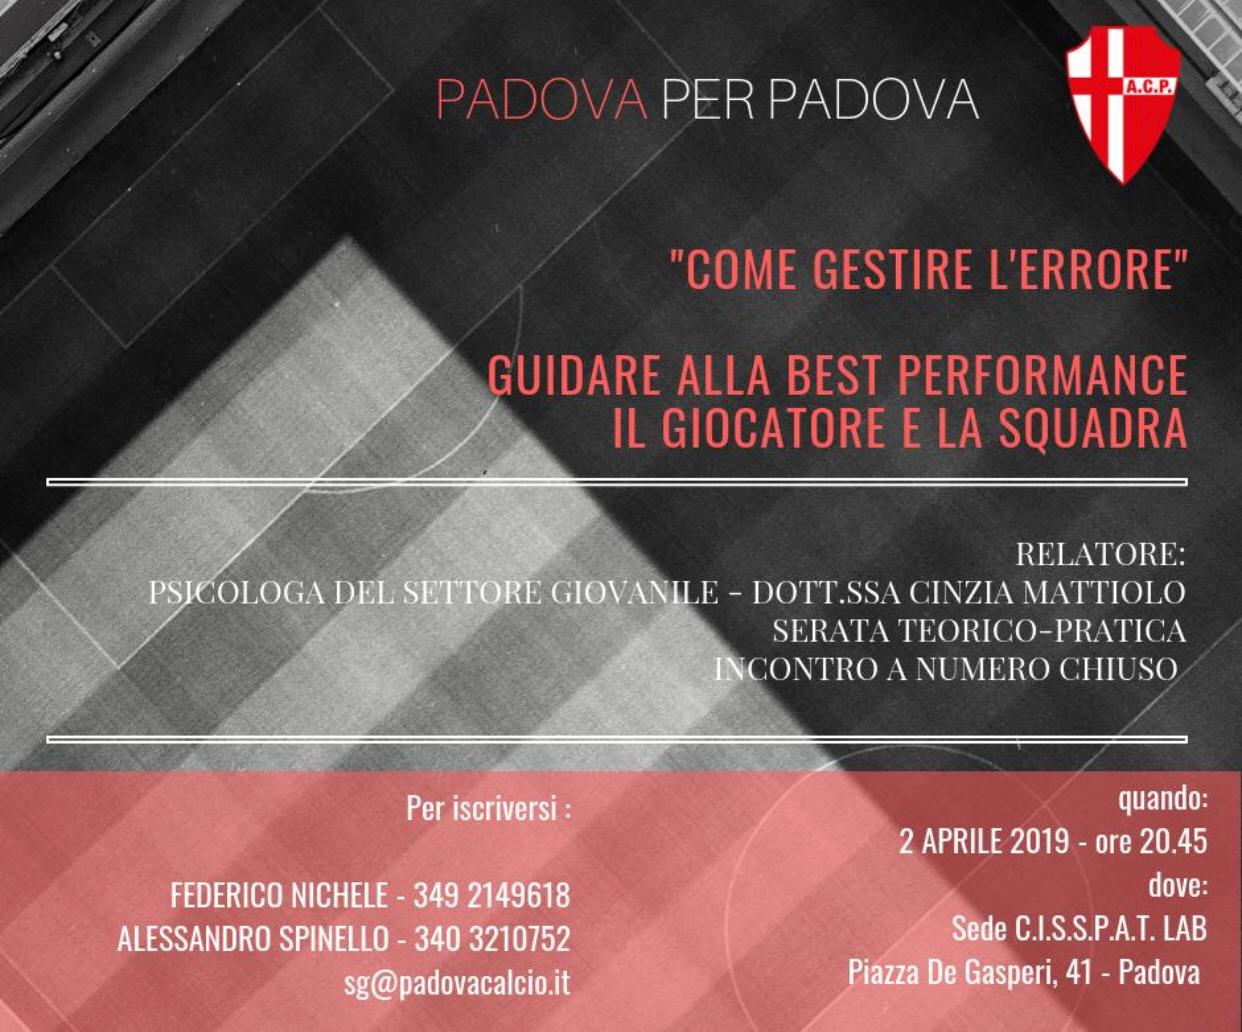 PadovaPerPadova-GestireErrore